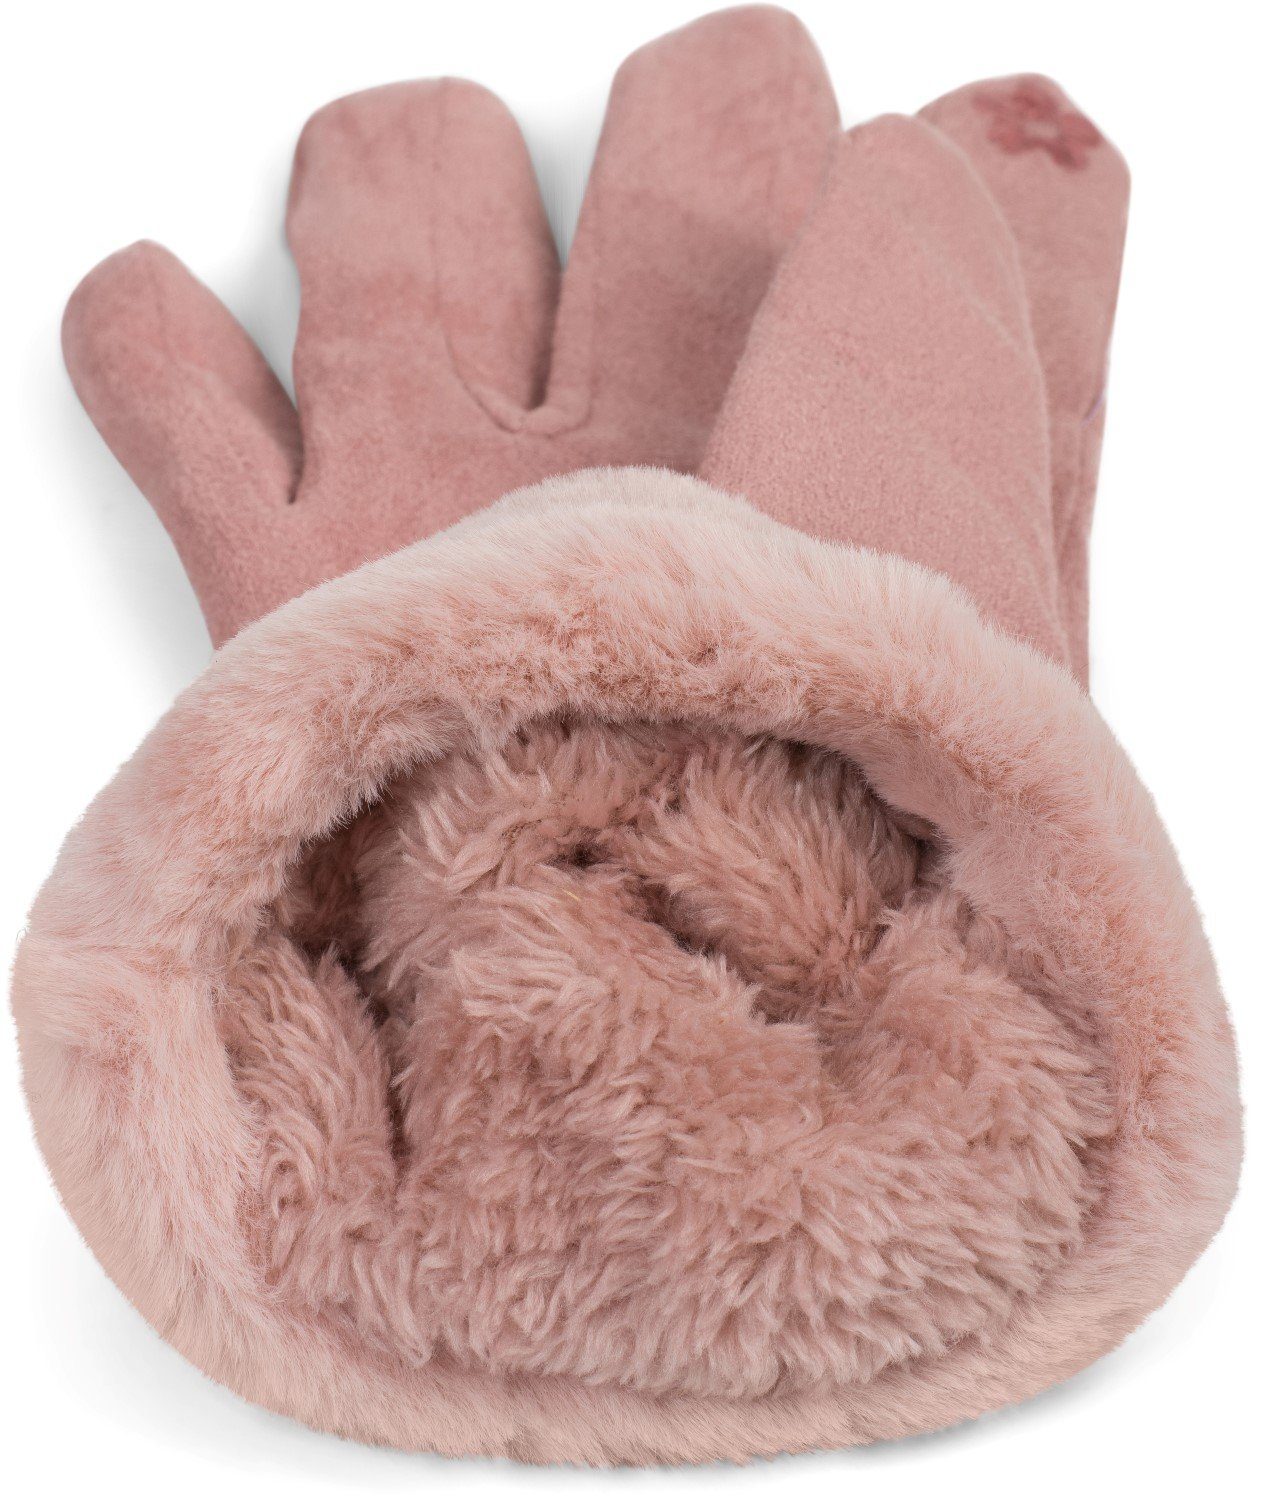 styleBREAKER Fleecehandschuhe Unifarbene Kunstfell Touchscreen Rose Handschuhe mit